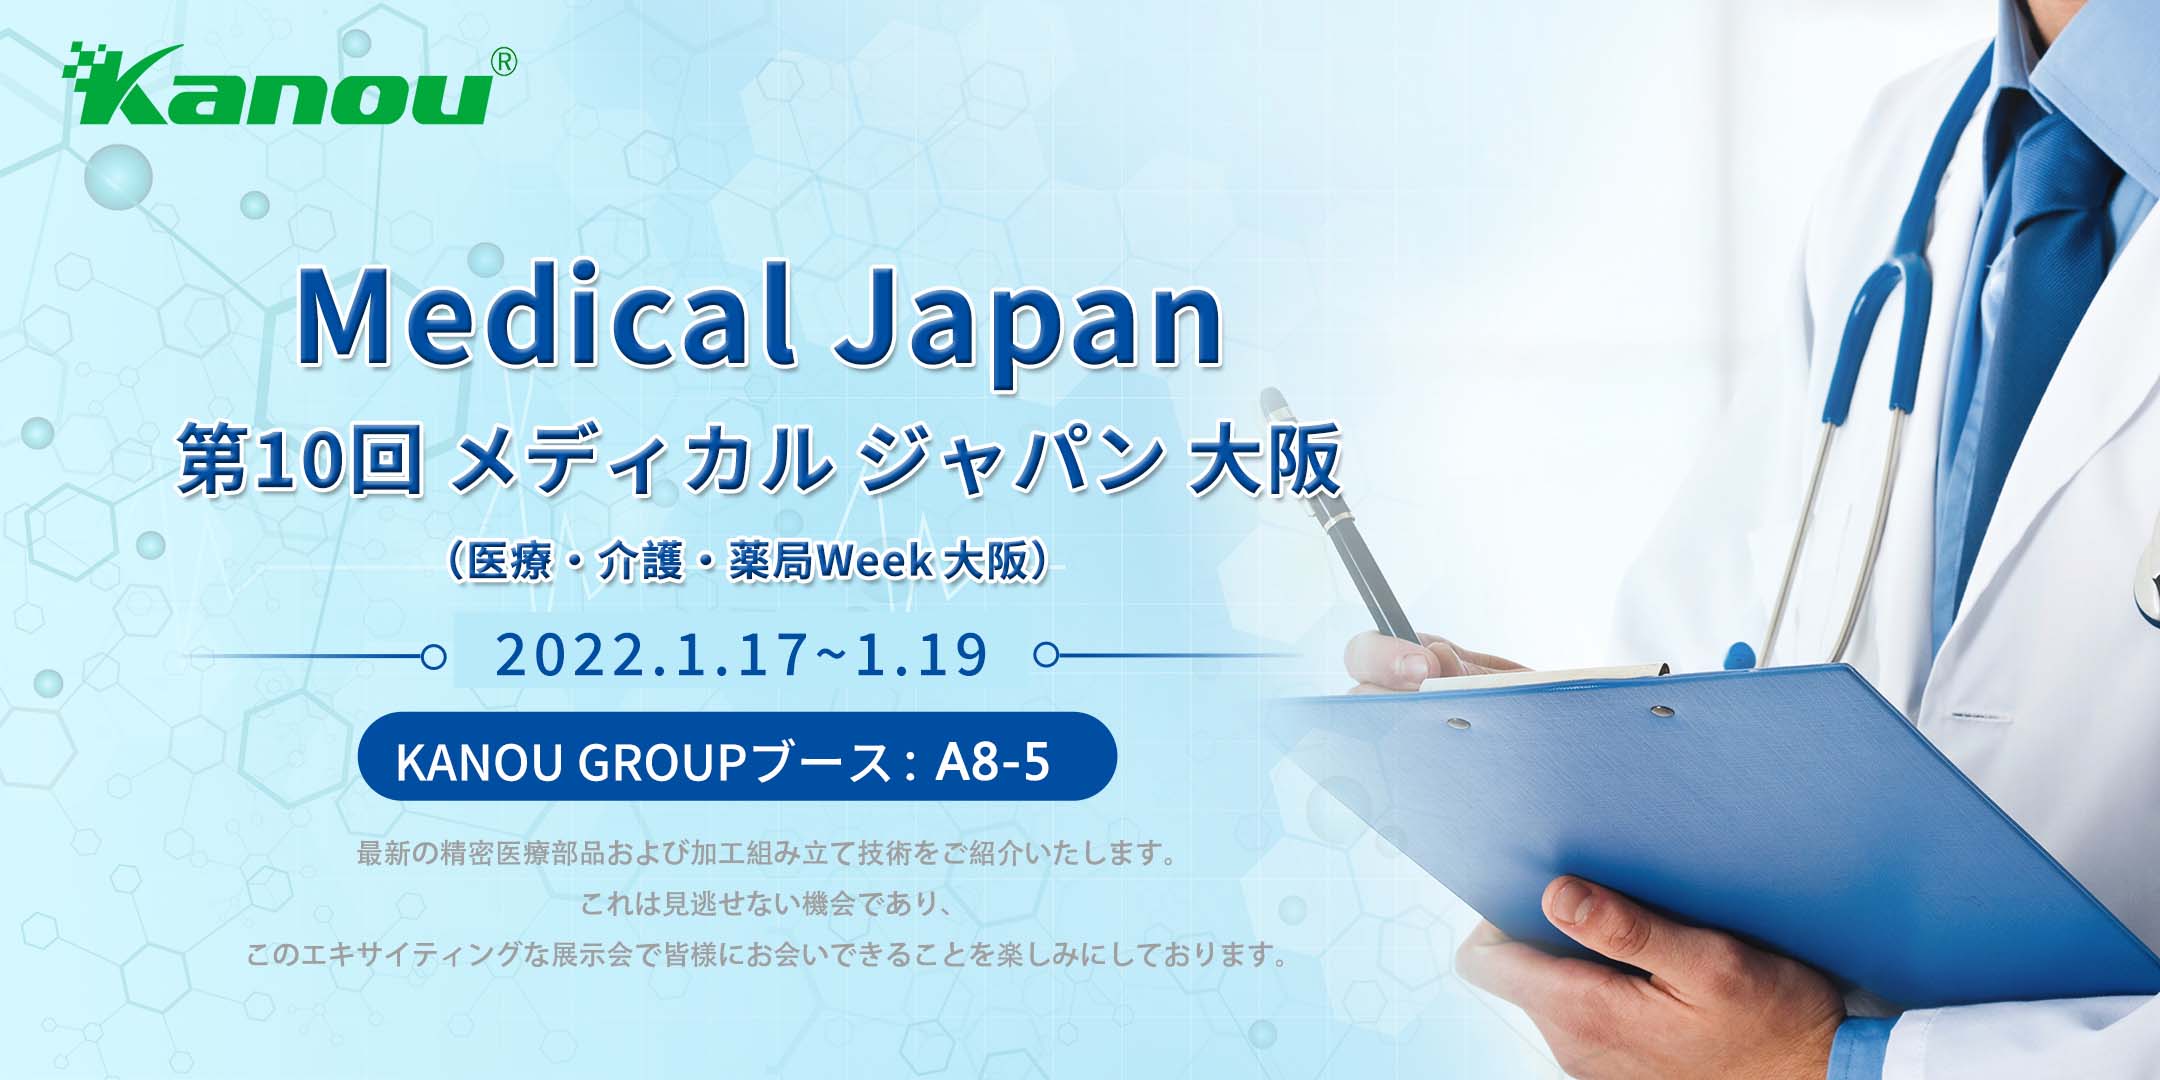 KANOU GROUPは、第10回Medical Japan大阪展示会へのご招待を申し上げます。